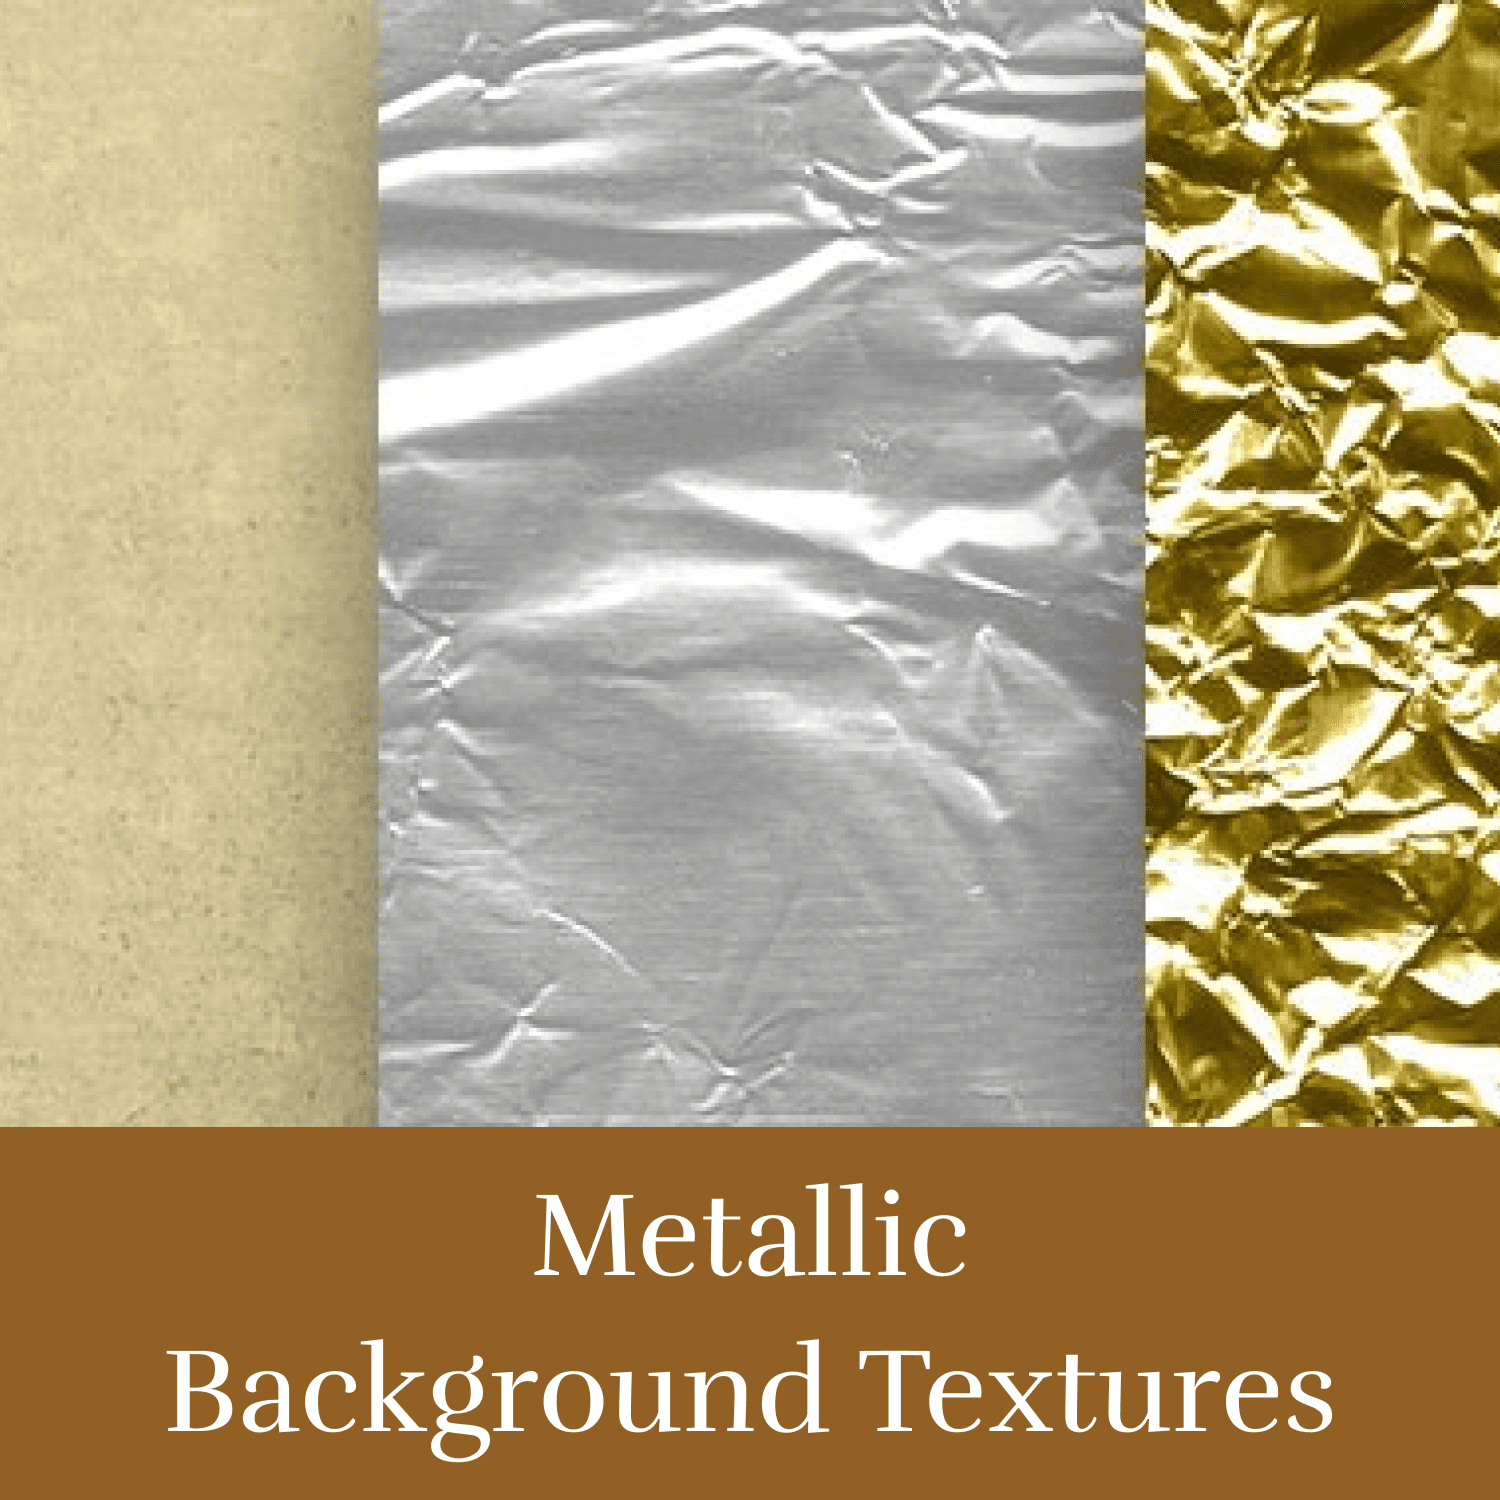 Metallic Background Textures cover.